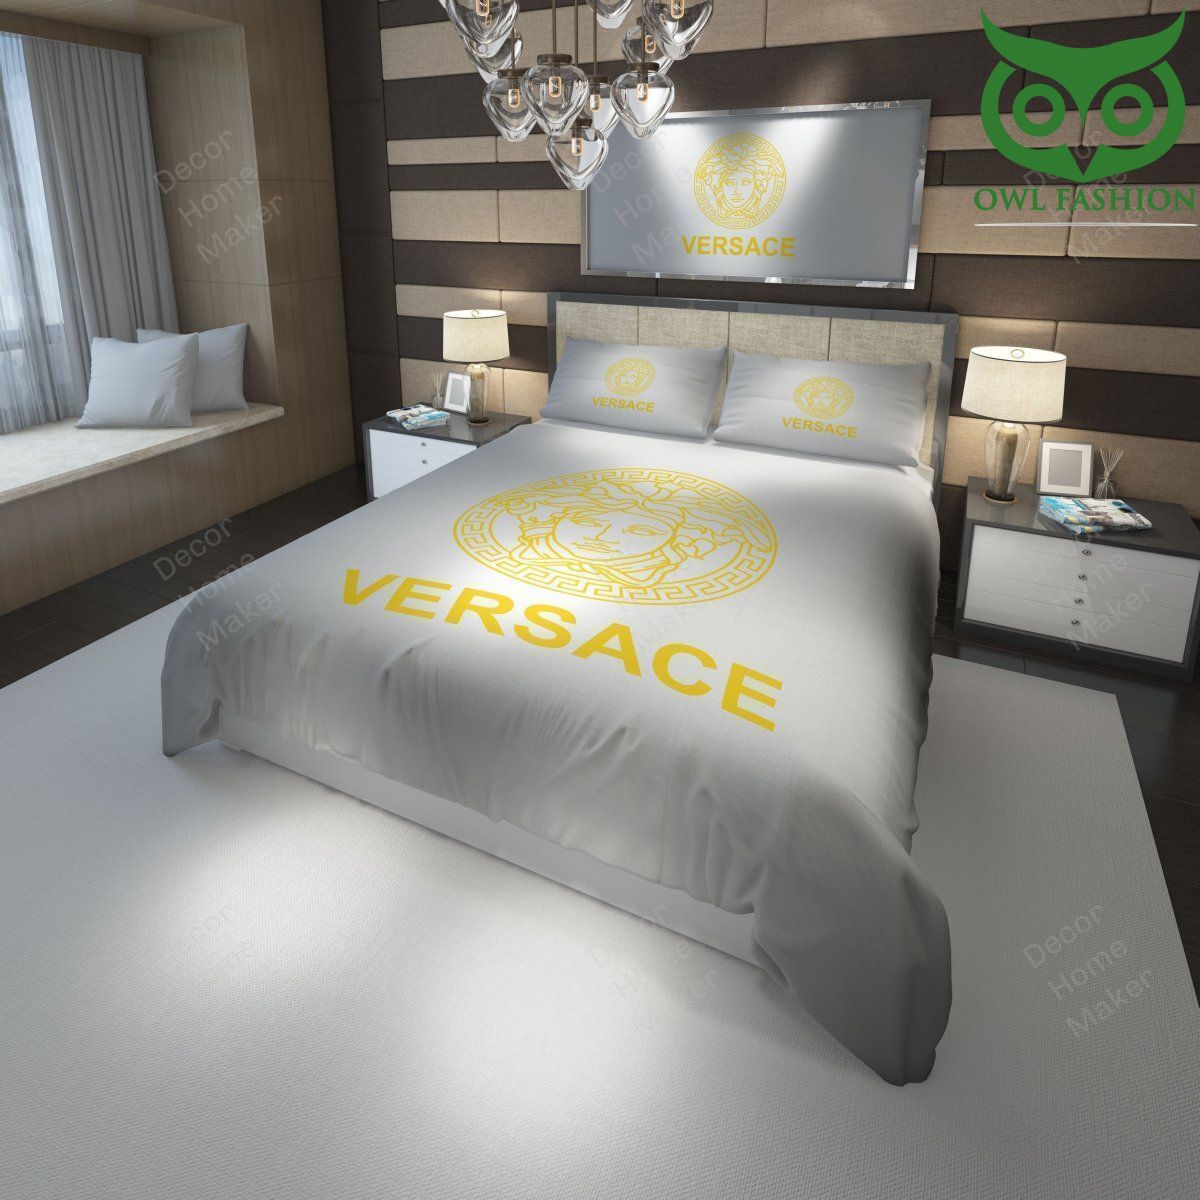 White Versace with golden logo bedding set